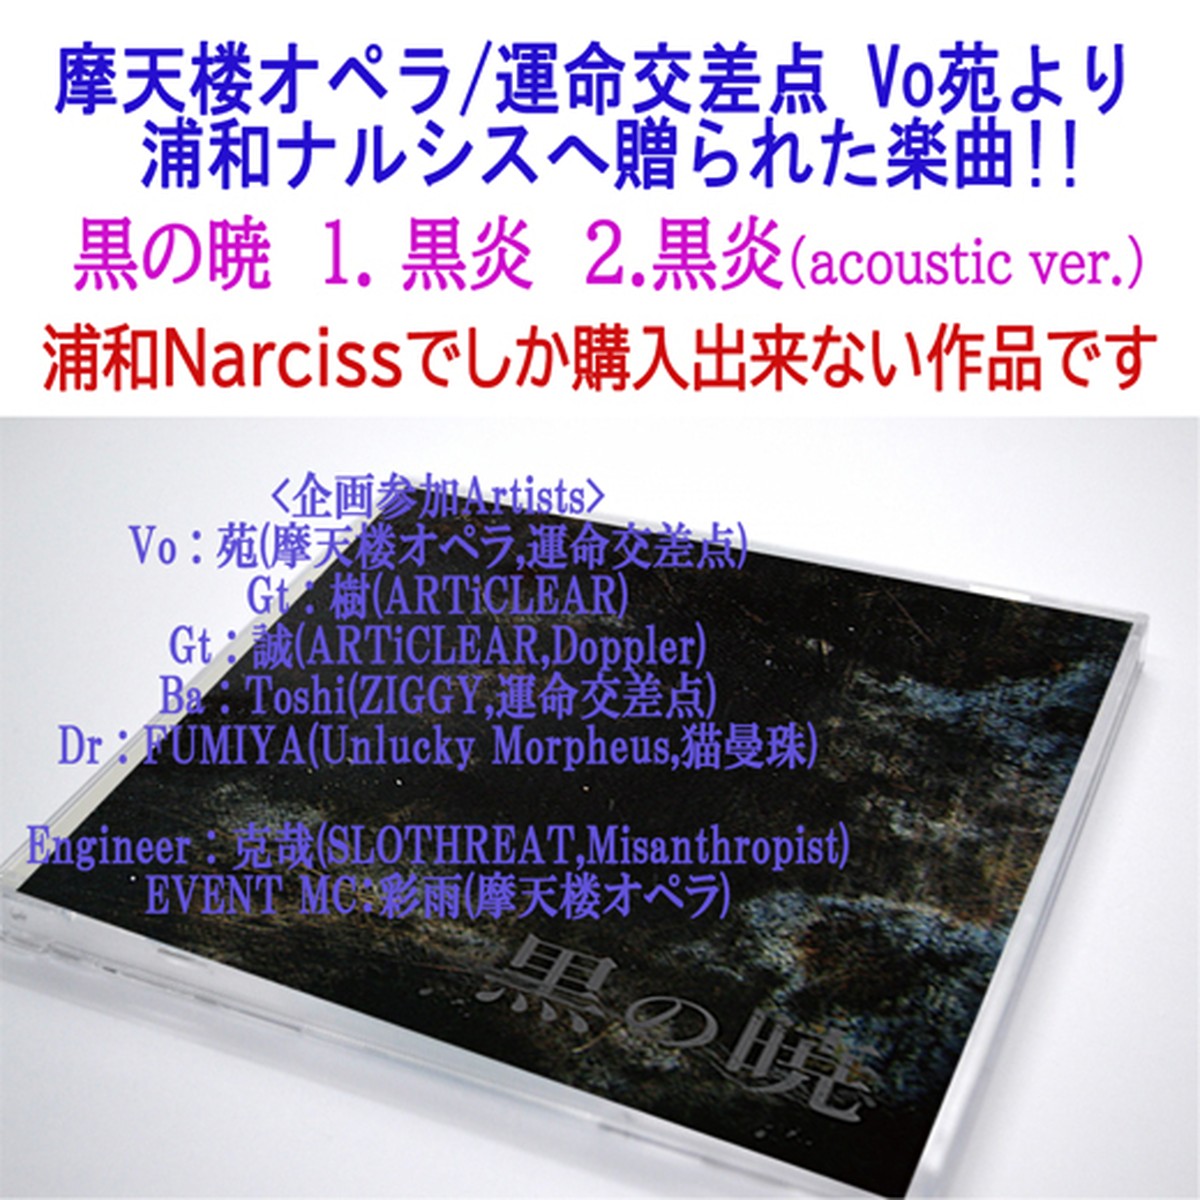 Special Cd 黒の暁 黒炎 ナルシスへの寄贈楽曲 年8月発売 Narciss Official